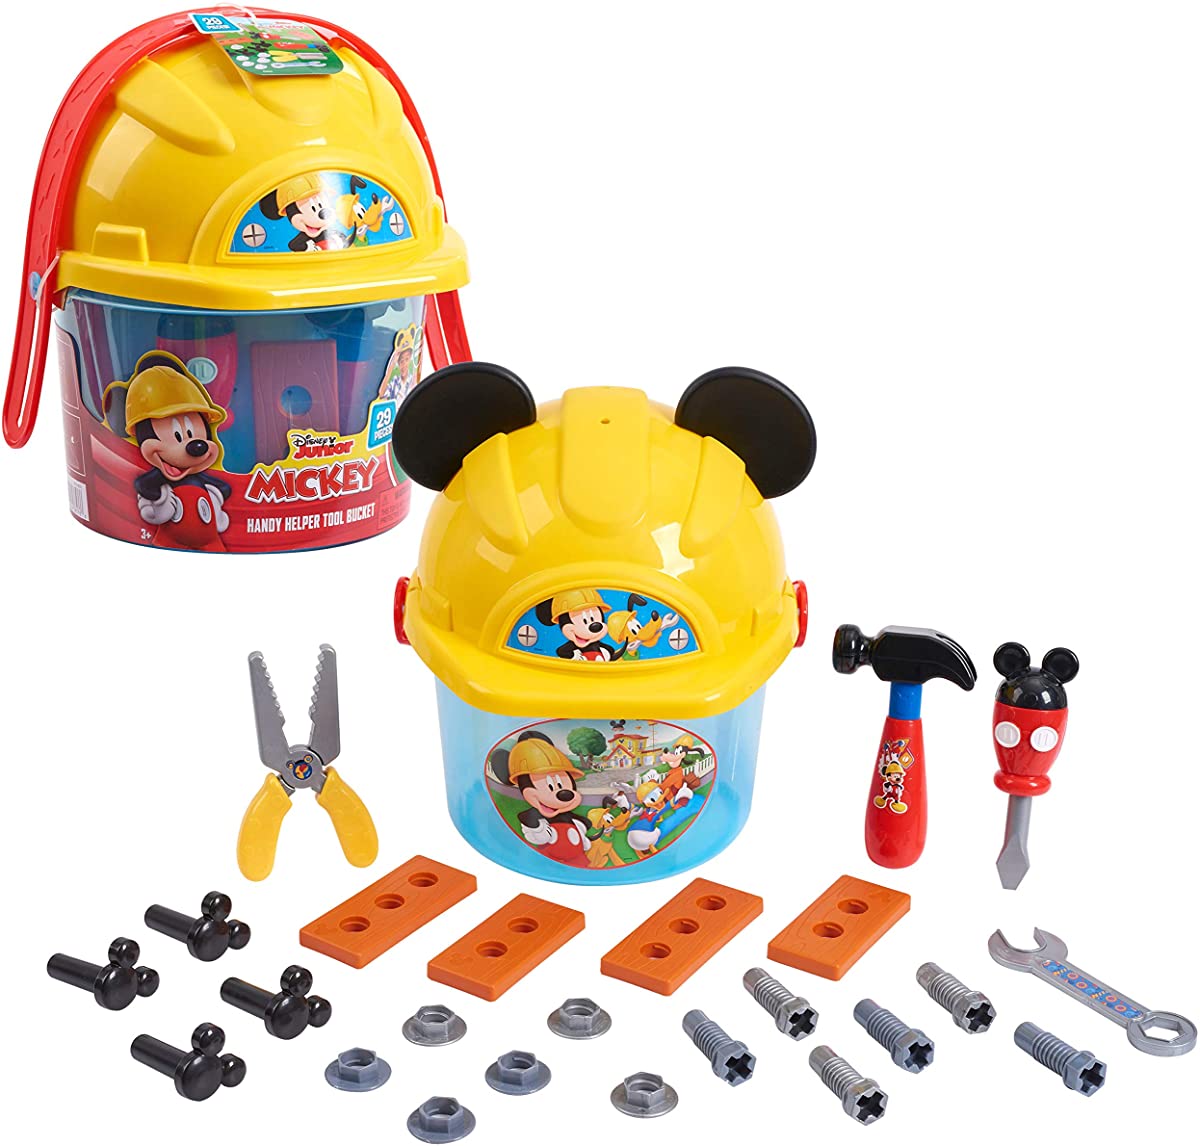 Disney Mickey Mouse Tools